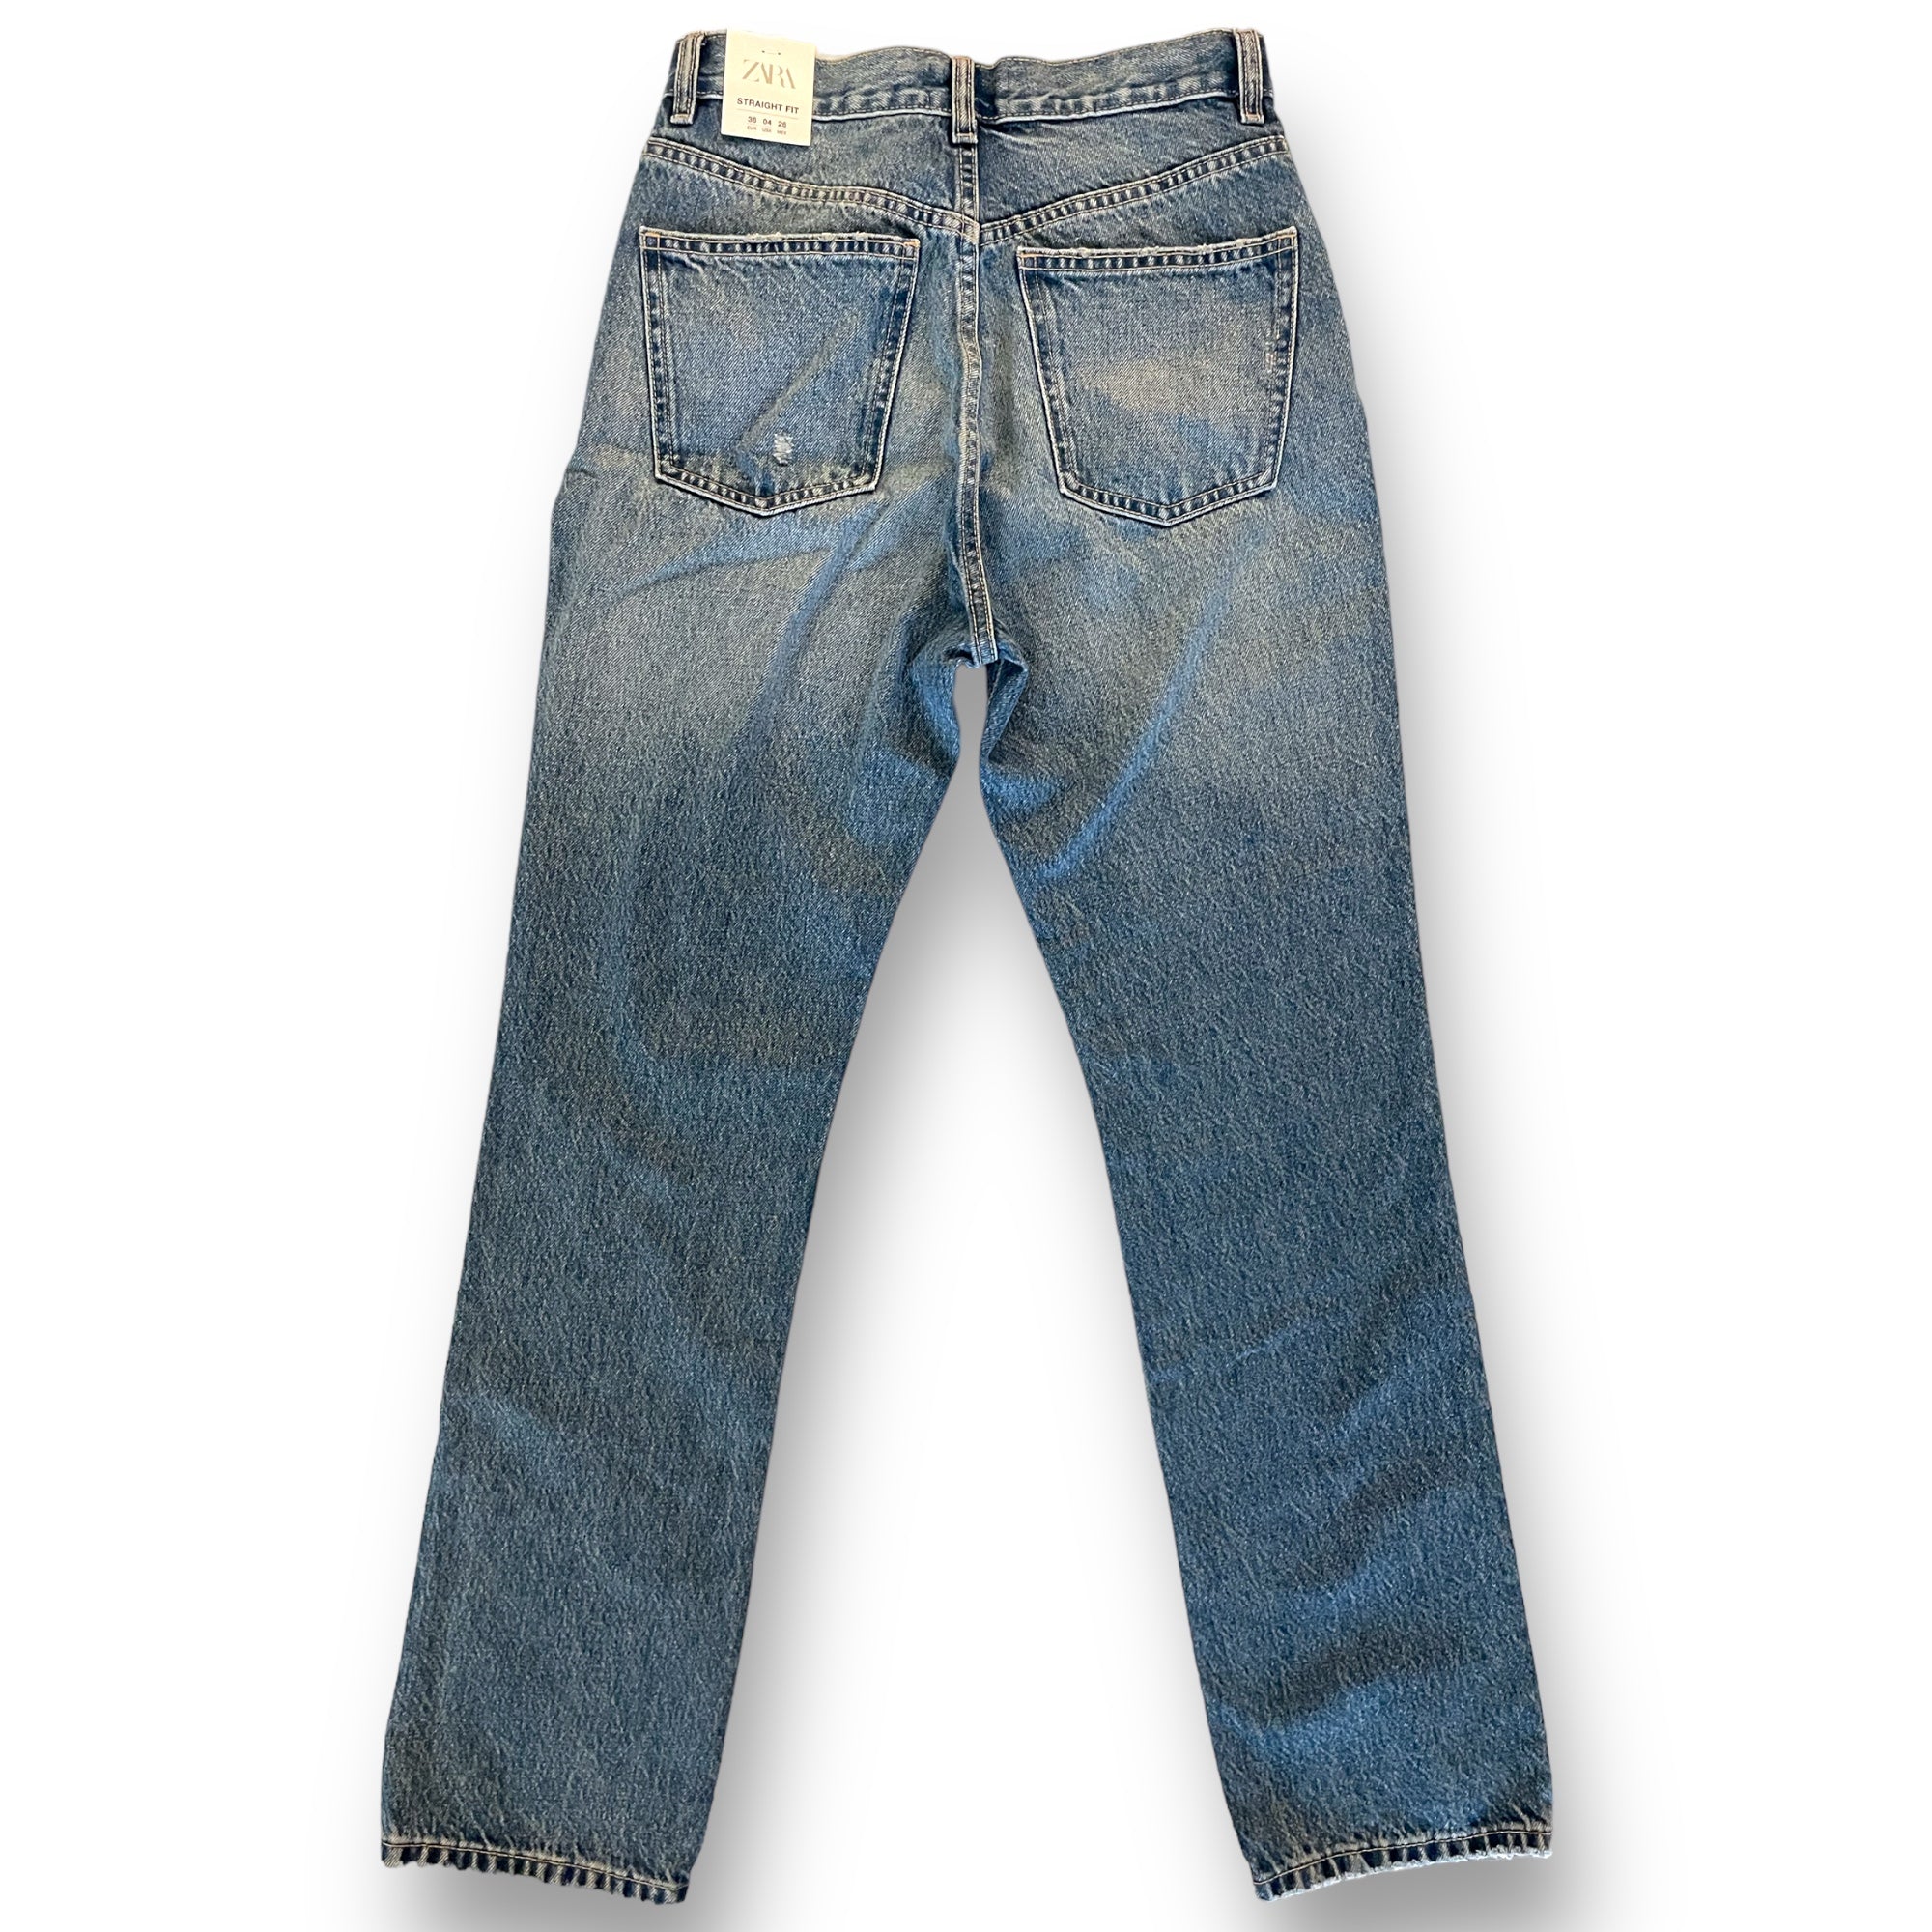 ZARA Straight Fit High-Rise Regular Length Denim Pants |Size: EU 34 US 4|